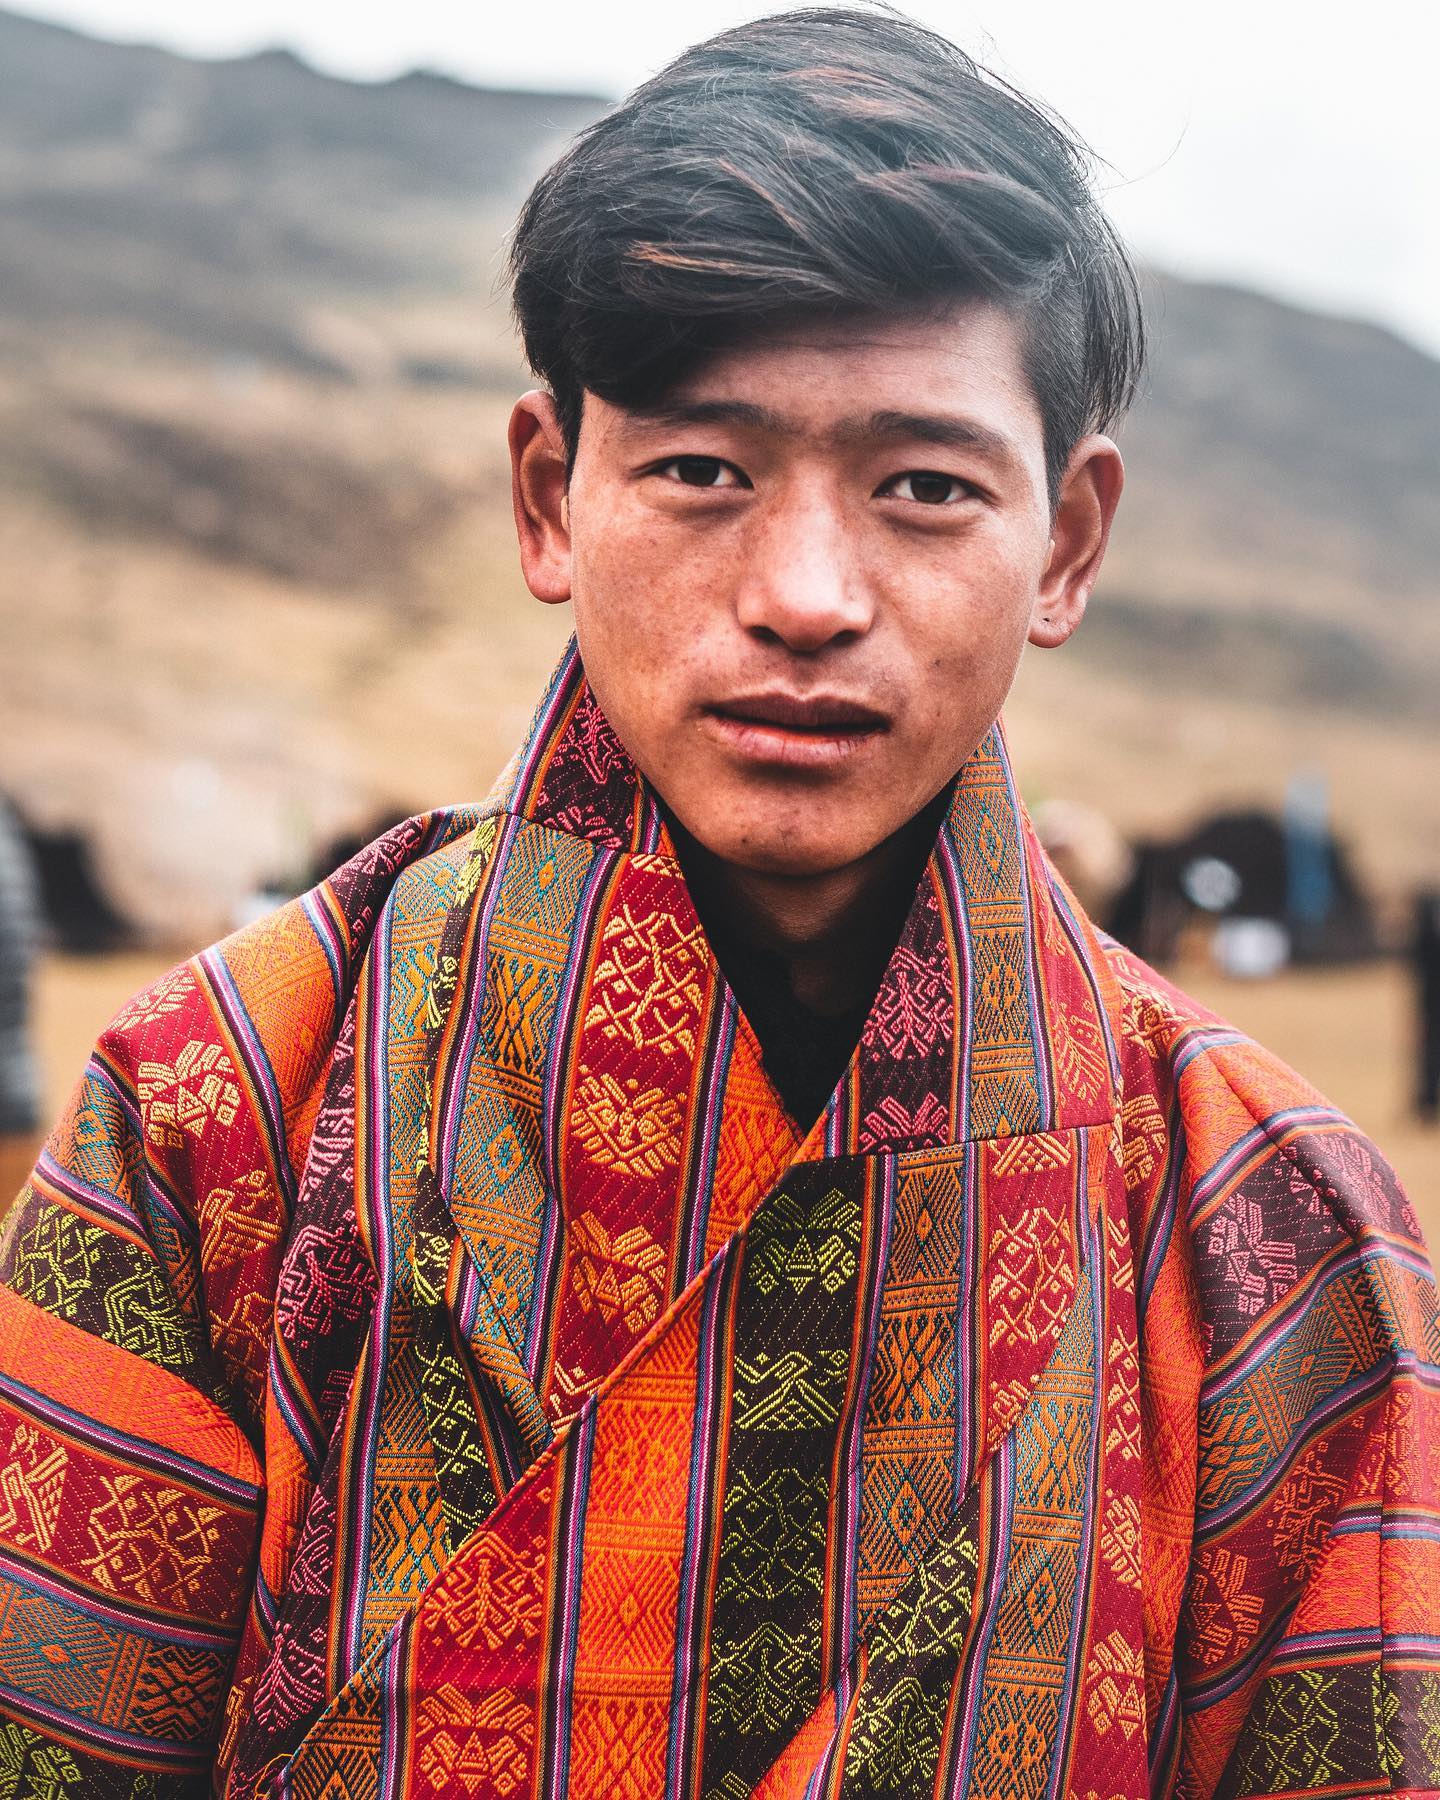 A Bhutanese teen attending the Highlander Festival in Laya.